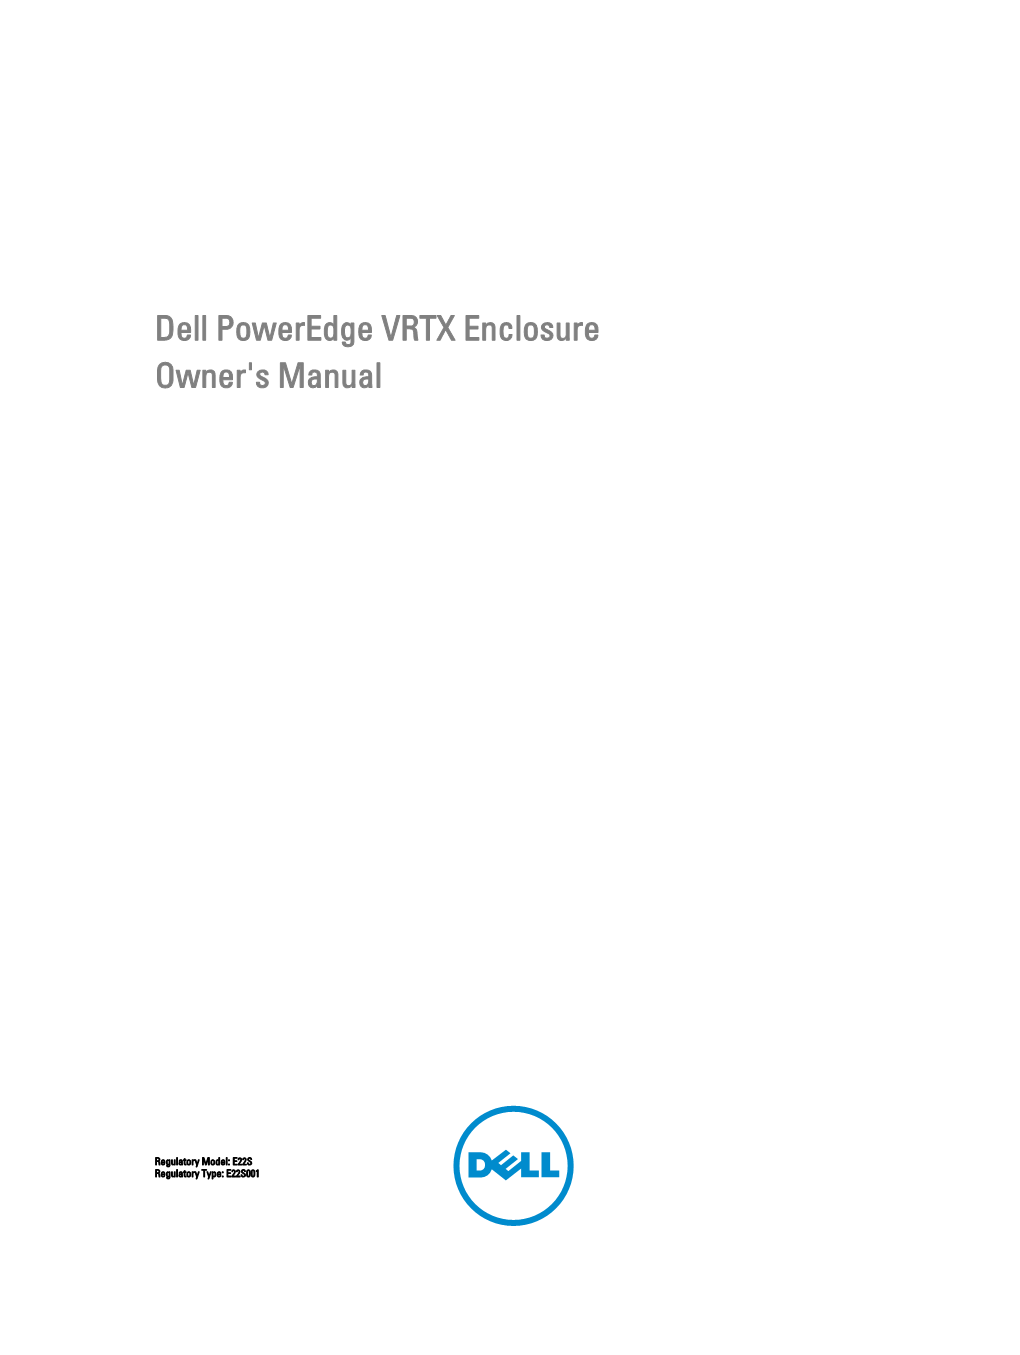 Dell Poweredge VRTX Enclosure Owner's Manual